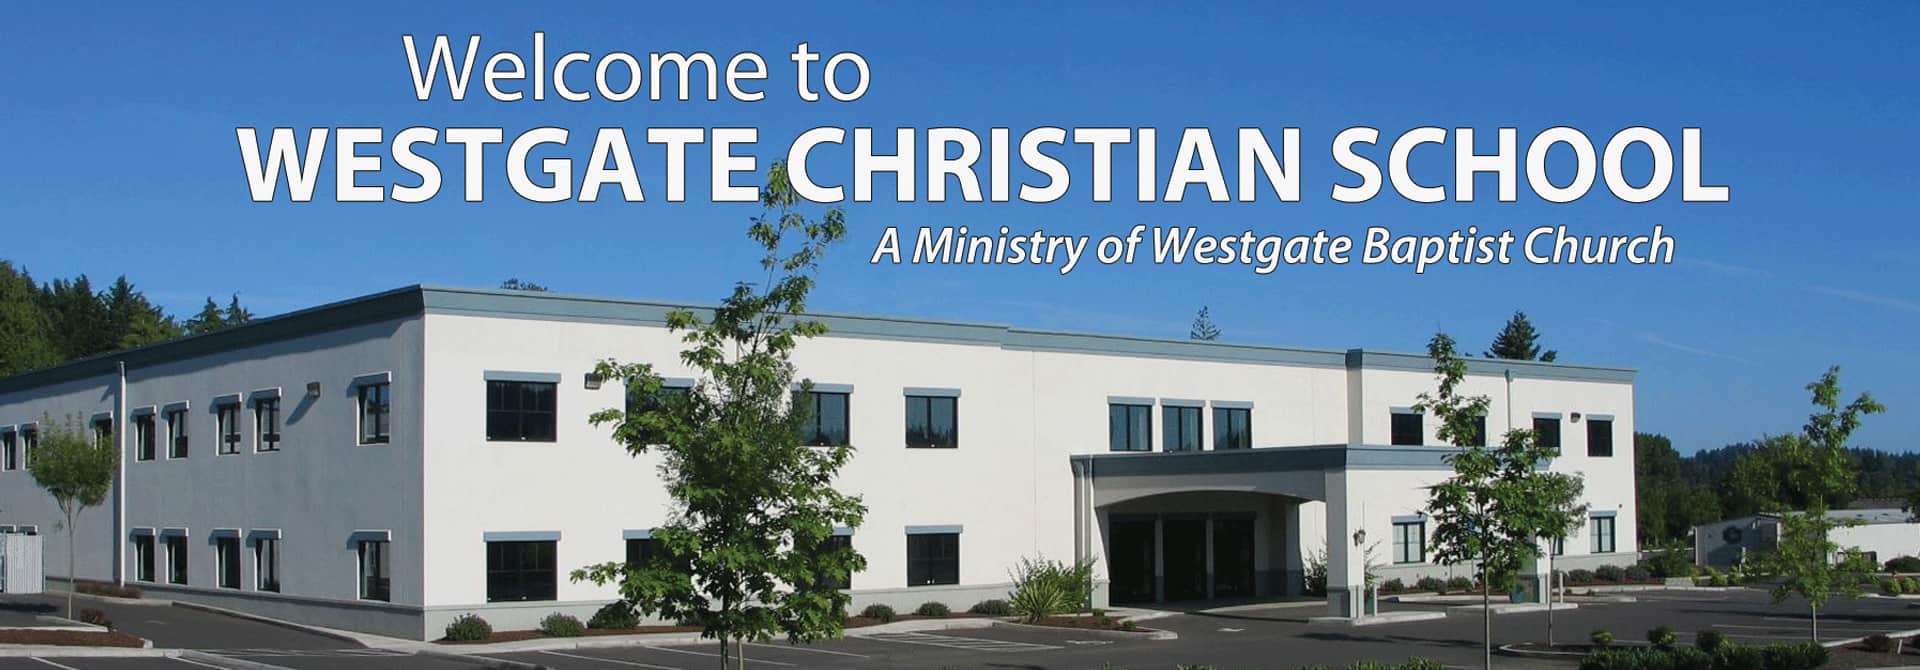 Westgate Christian School